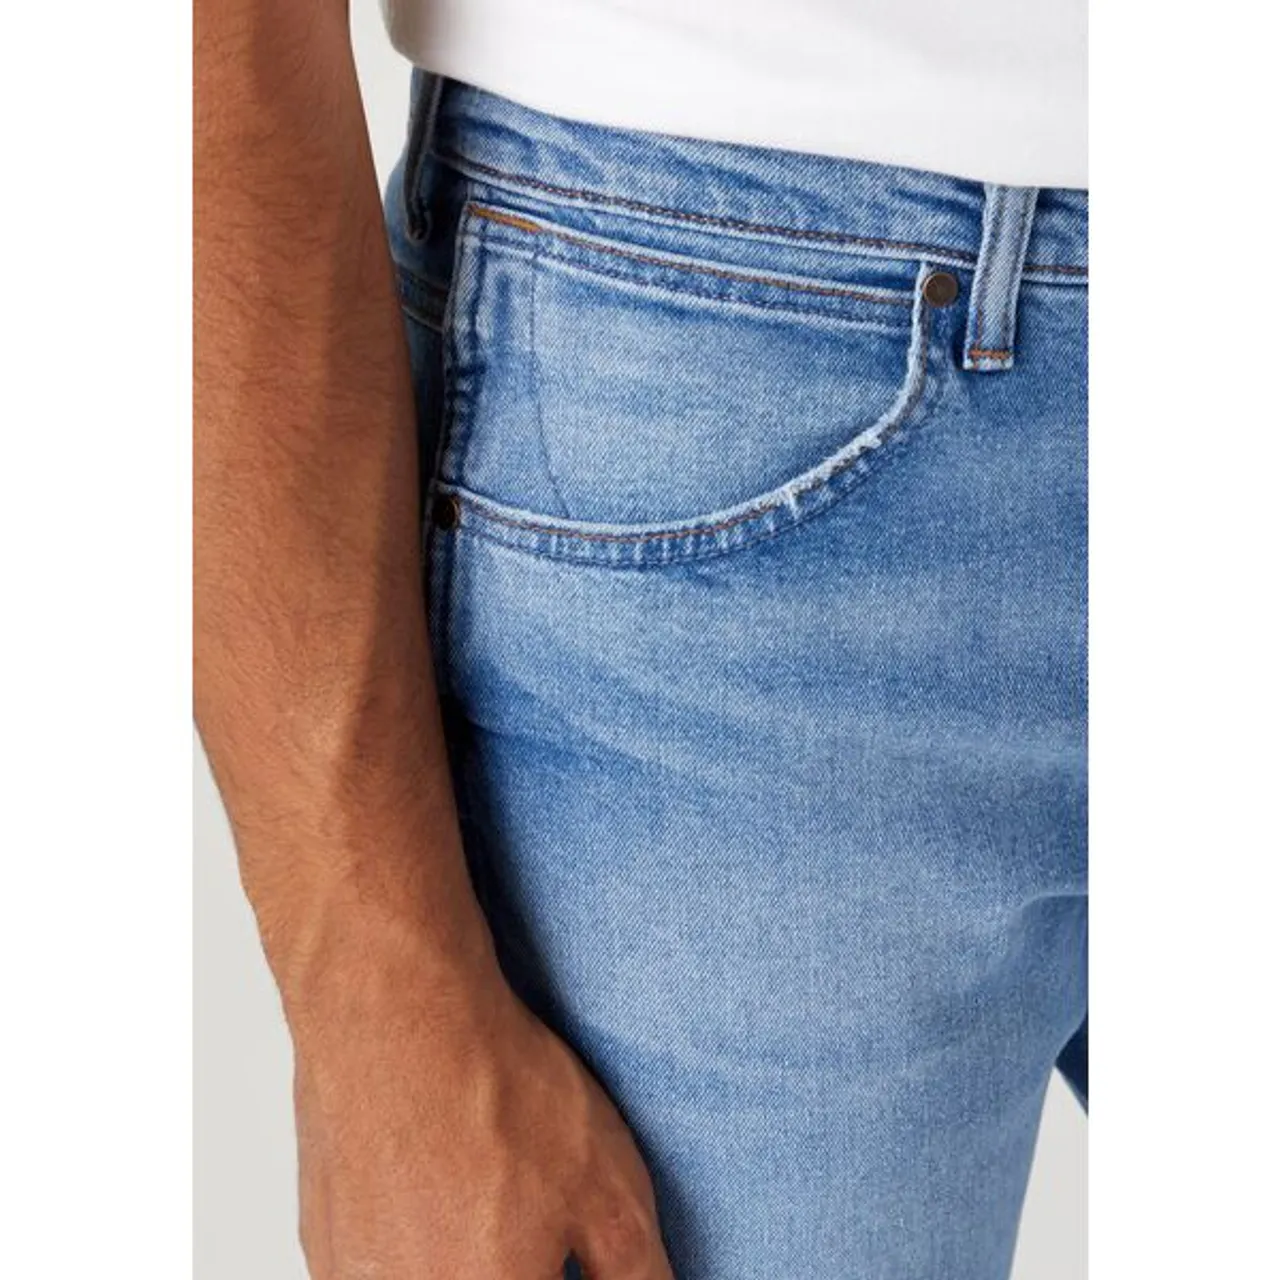 5-Pocket-Jeans WRANGLER "River FREE TO STRETCH" Gr. 32, Länge 34, blau (cool twist) Herren Jeans 5-Pocket-Jeans